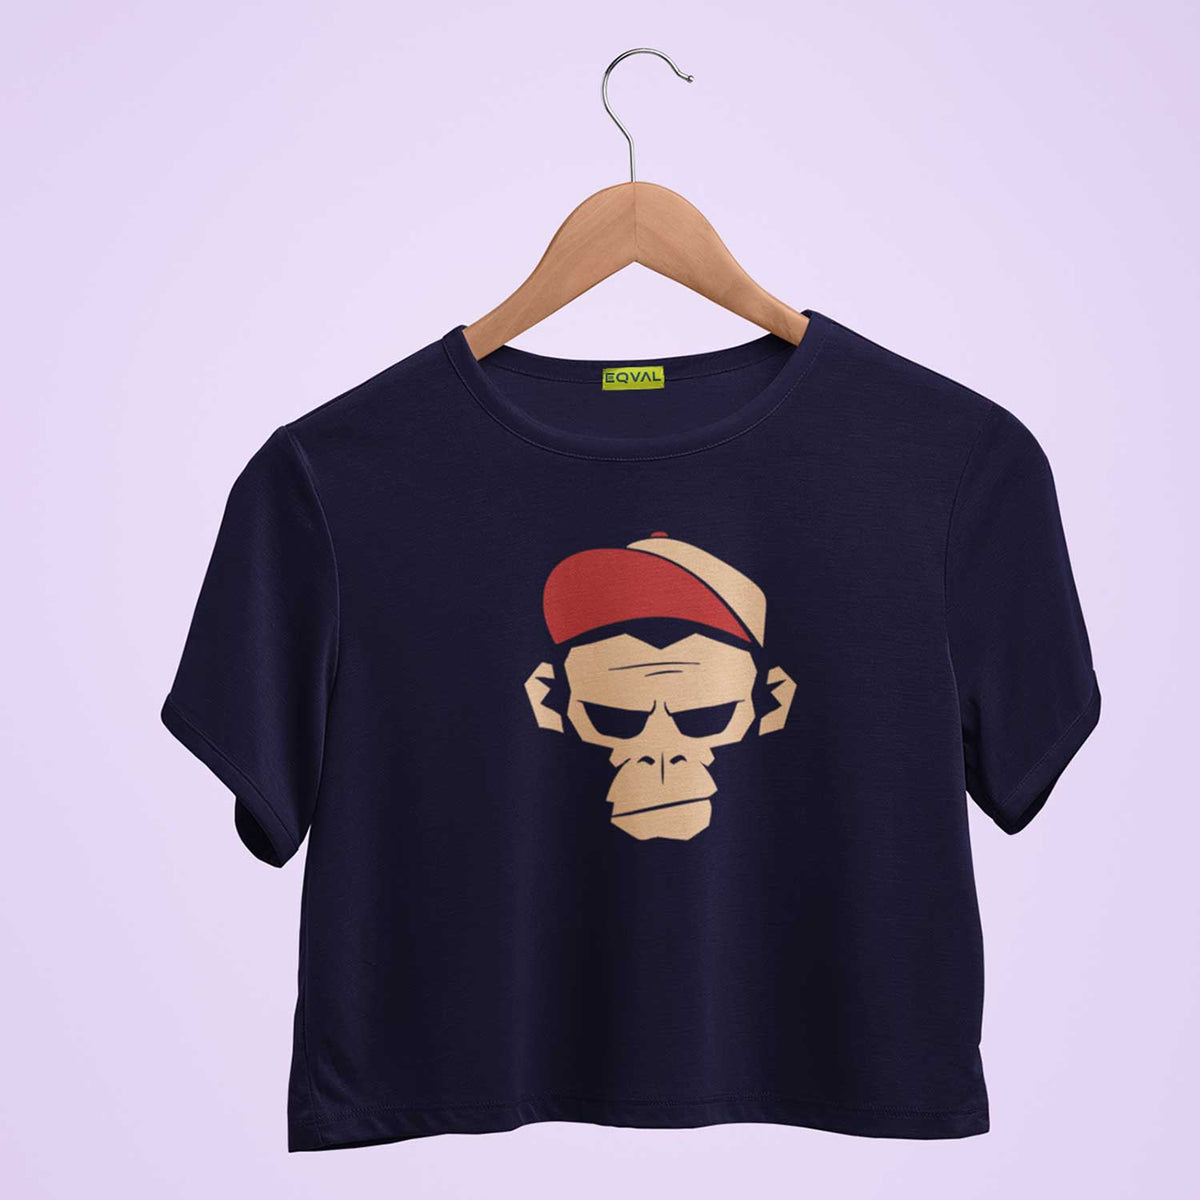 Monkey Head Printed Crop Top T-shirt